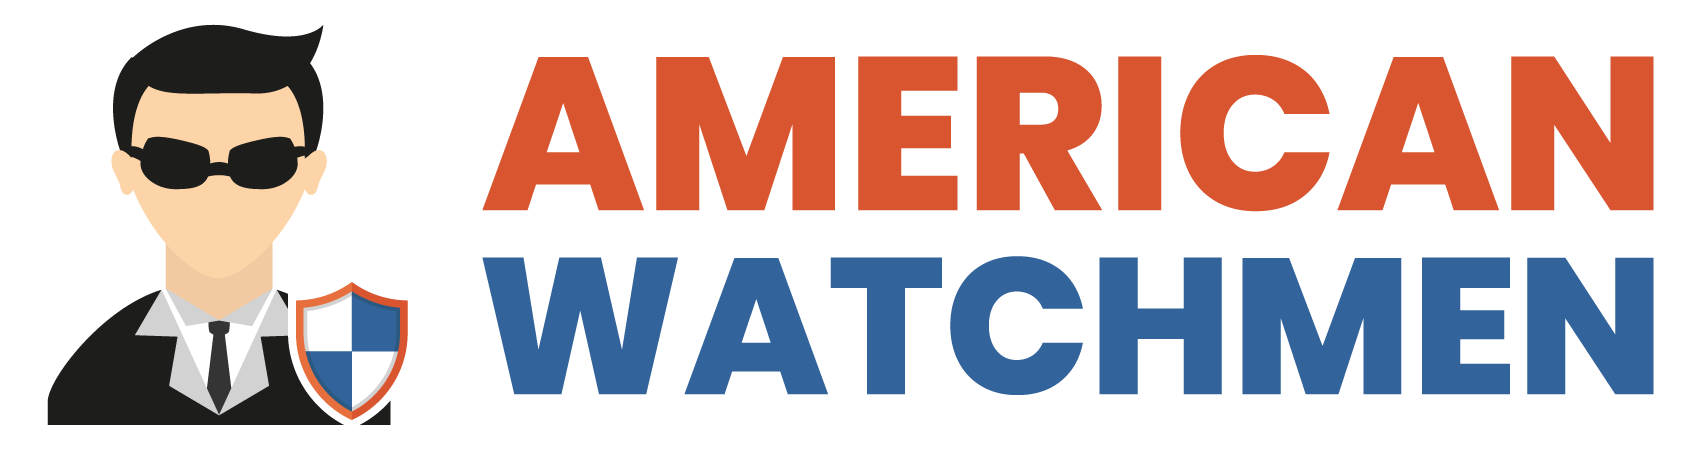 American Watchmen